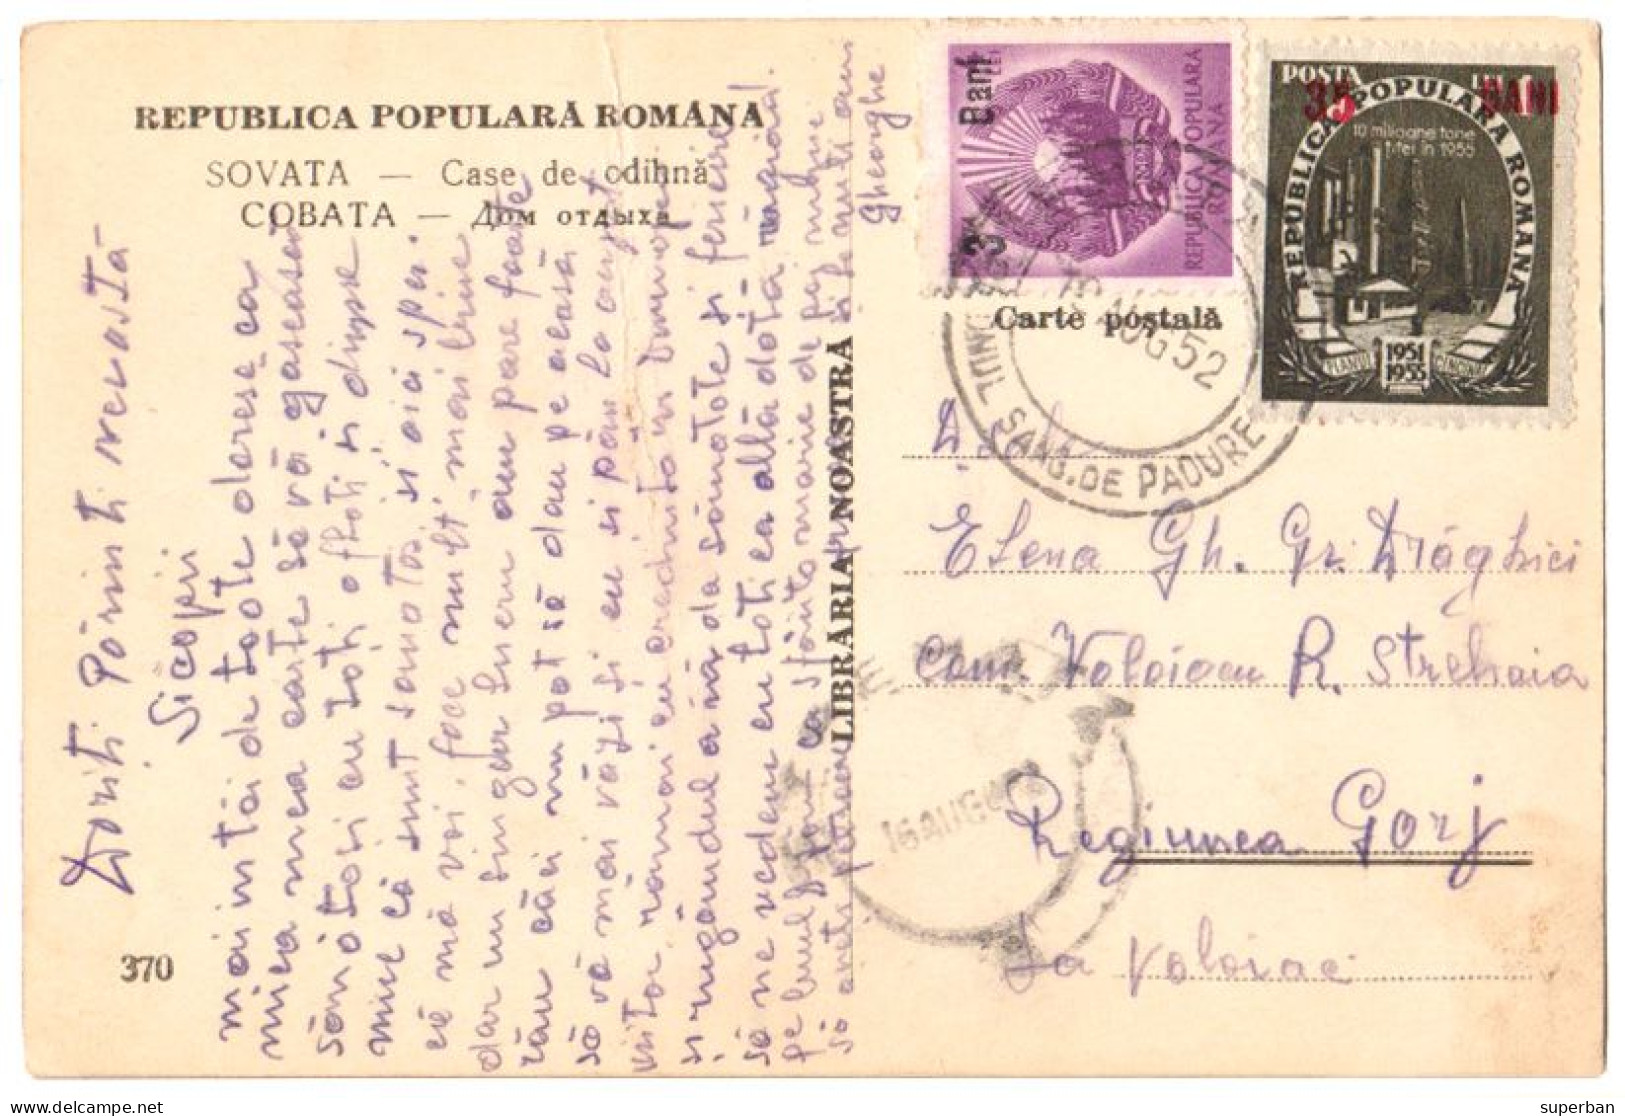 ROMANIA : 1952 - STABILIZAREA MONETARA / MONETARY STABILIZATION - POSTCARD MAILED With OVERPRINTED STAMPS - RRR (am195) - Storia Postale